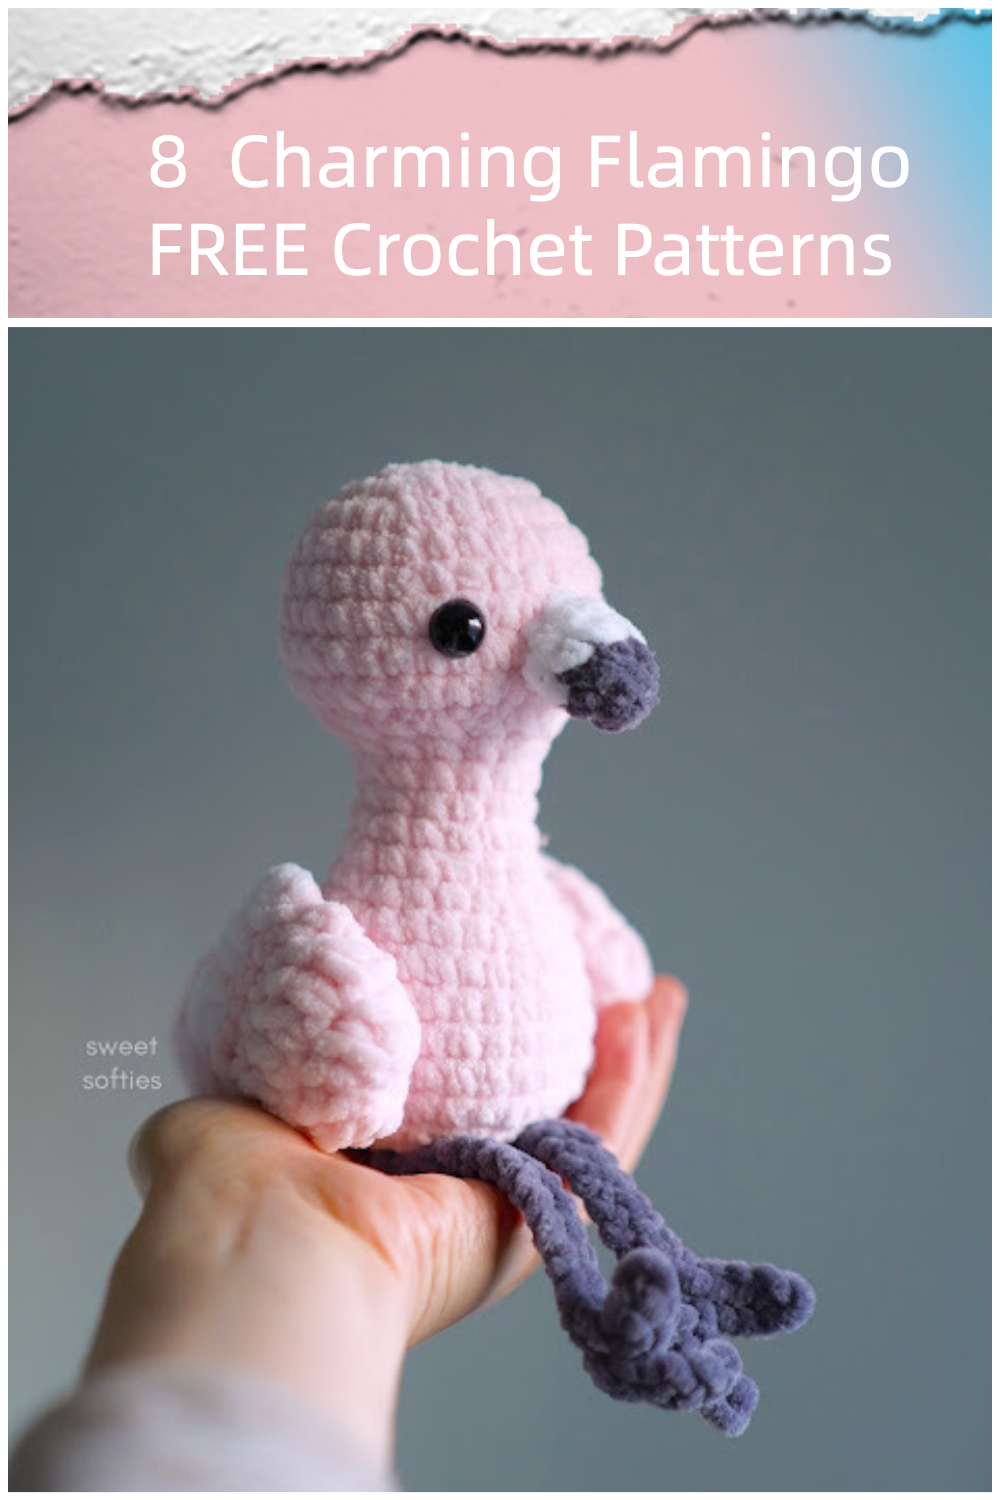 8 Charming Flamingo FREE Crochet Patterns